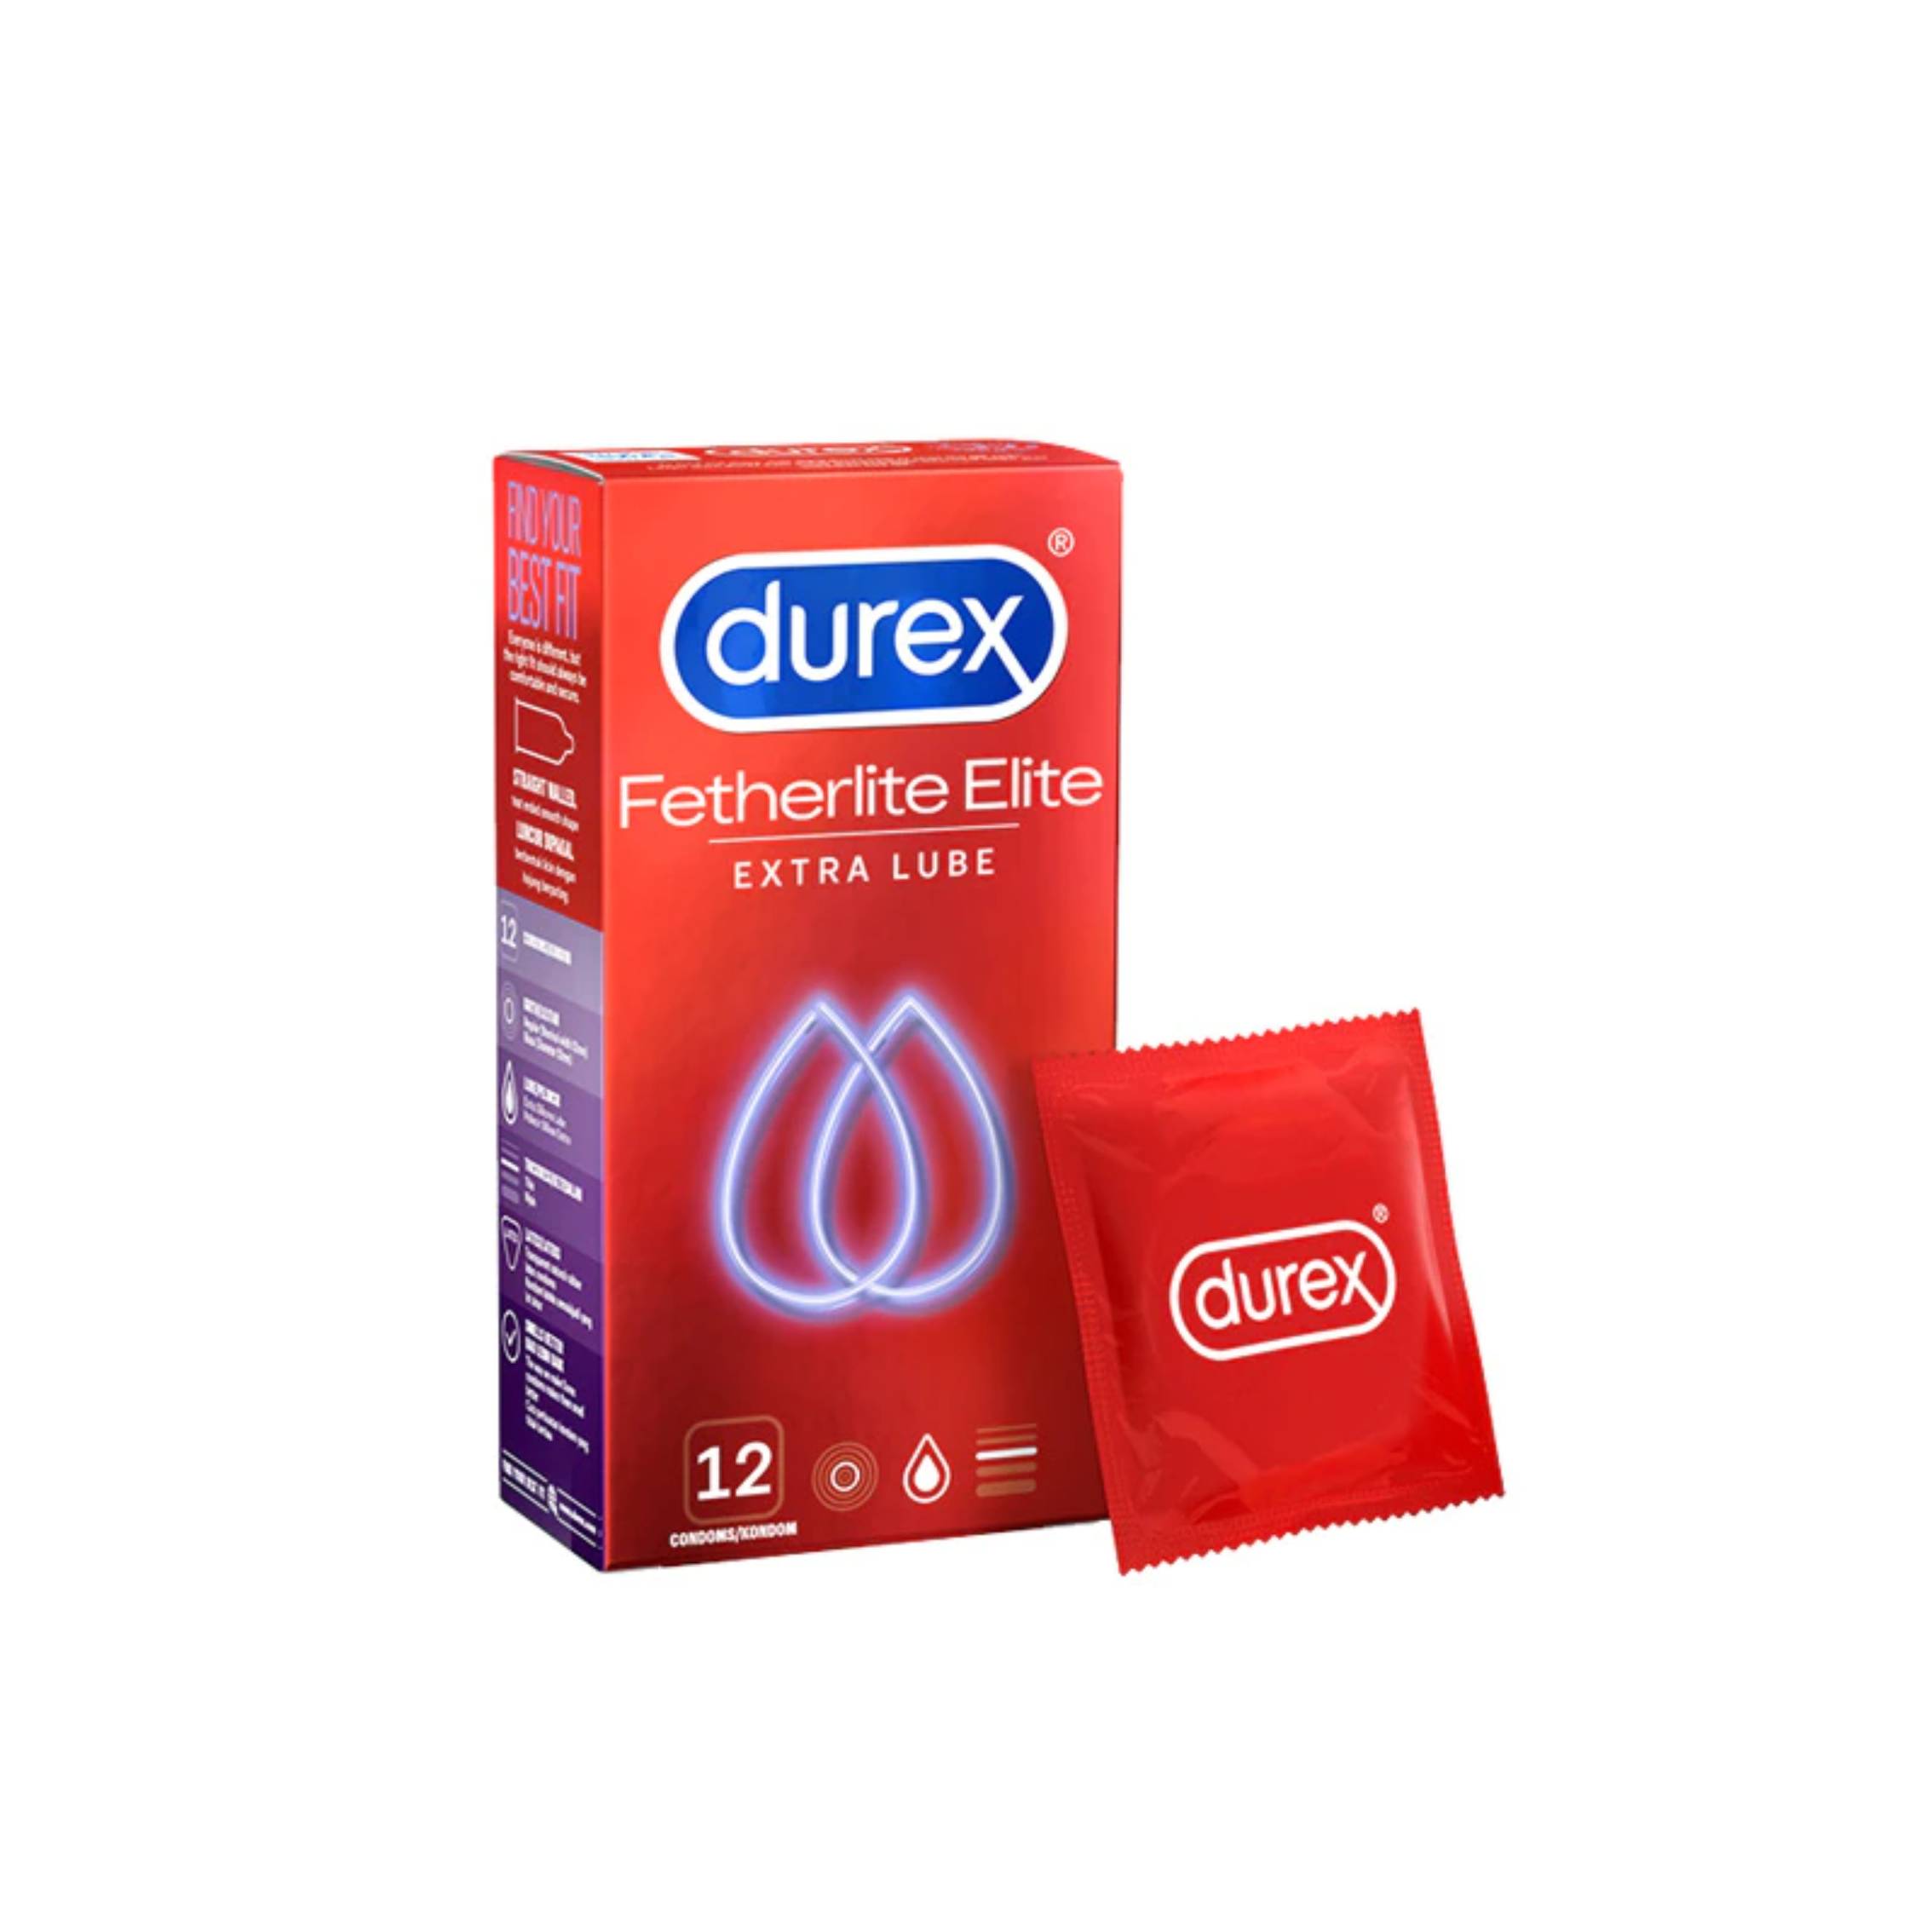 Durex Fetherlite Elite Condom 12s - DoctorOnCall Online Pharmacy